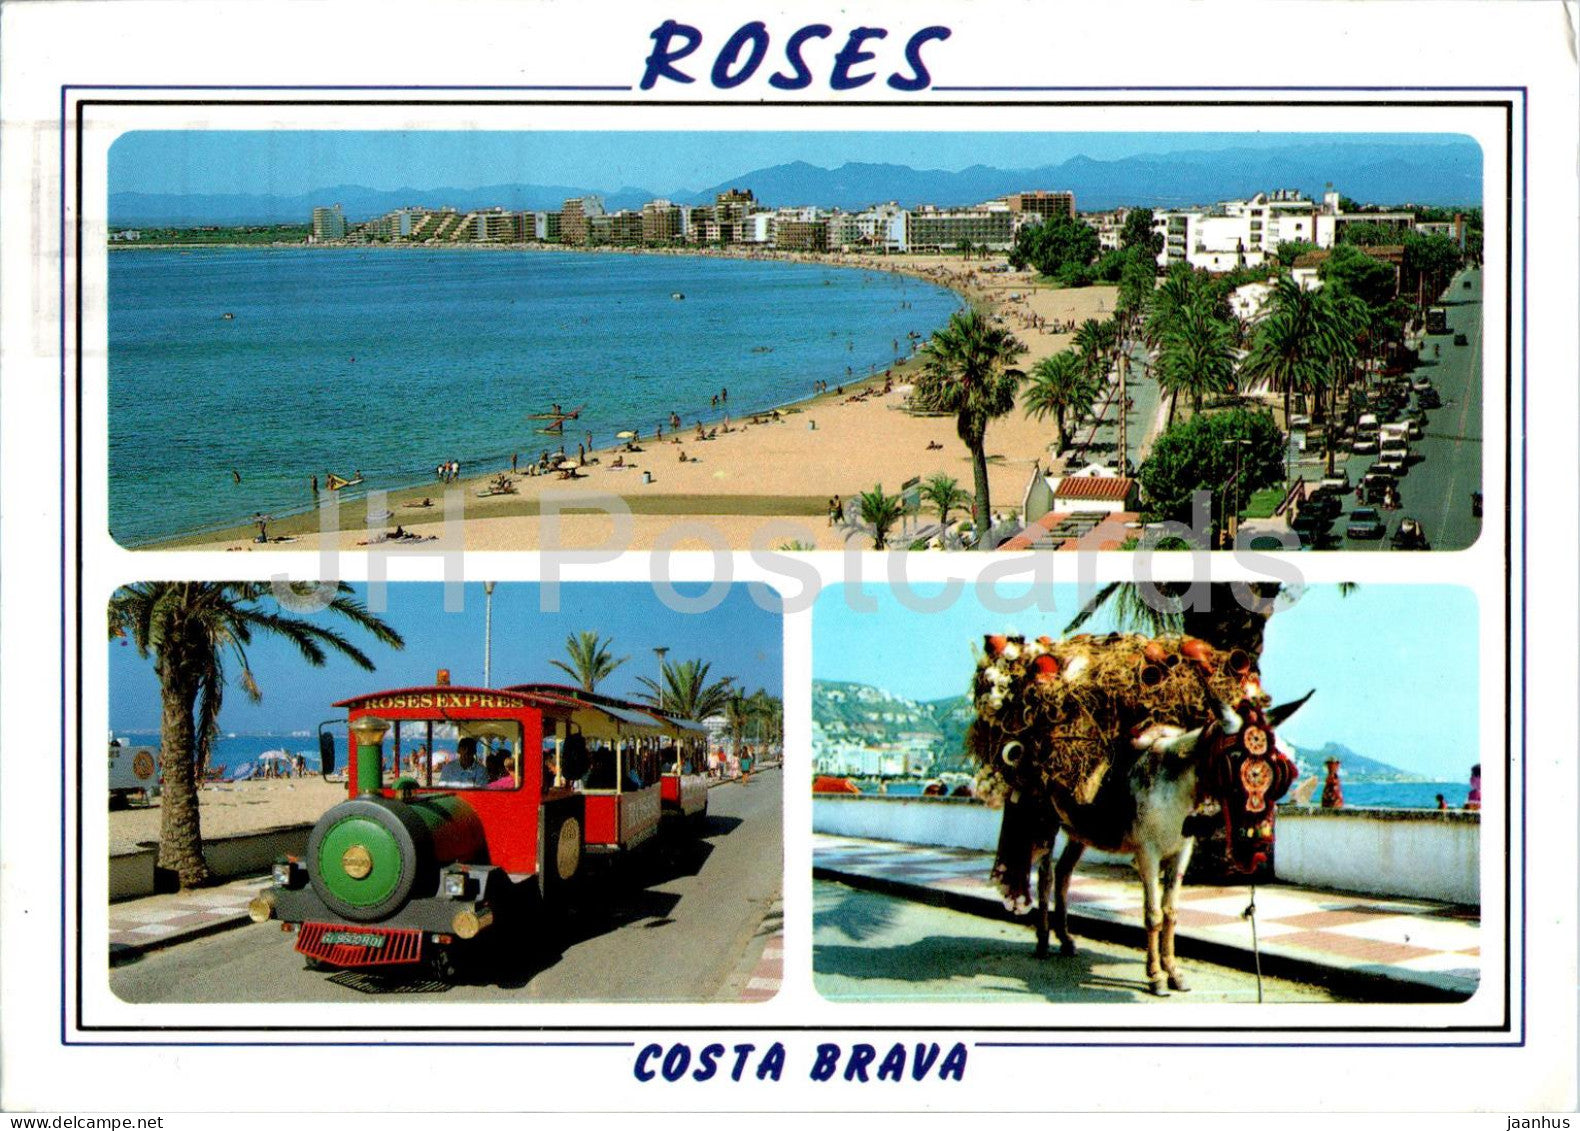 Roses - Costa Brava - Diverses Vistes - multiview - mini train - animals - donkey - 1253 - 1995 - Spain - used - JH Postcards